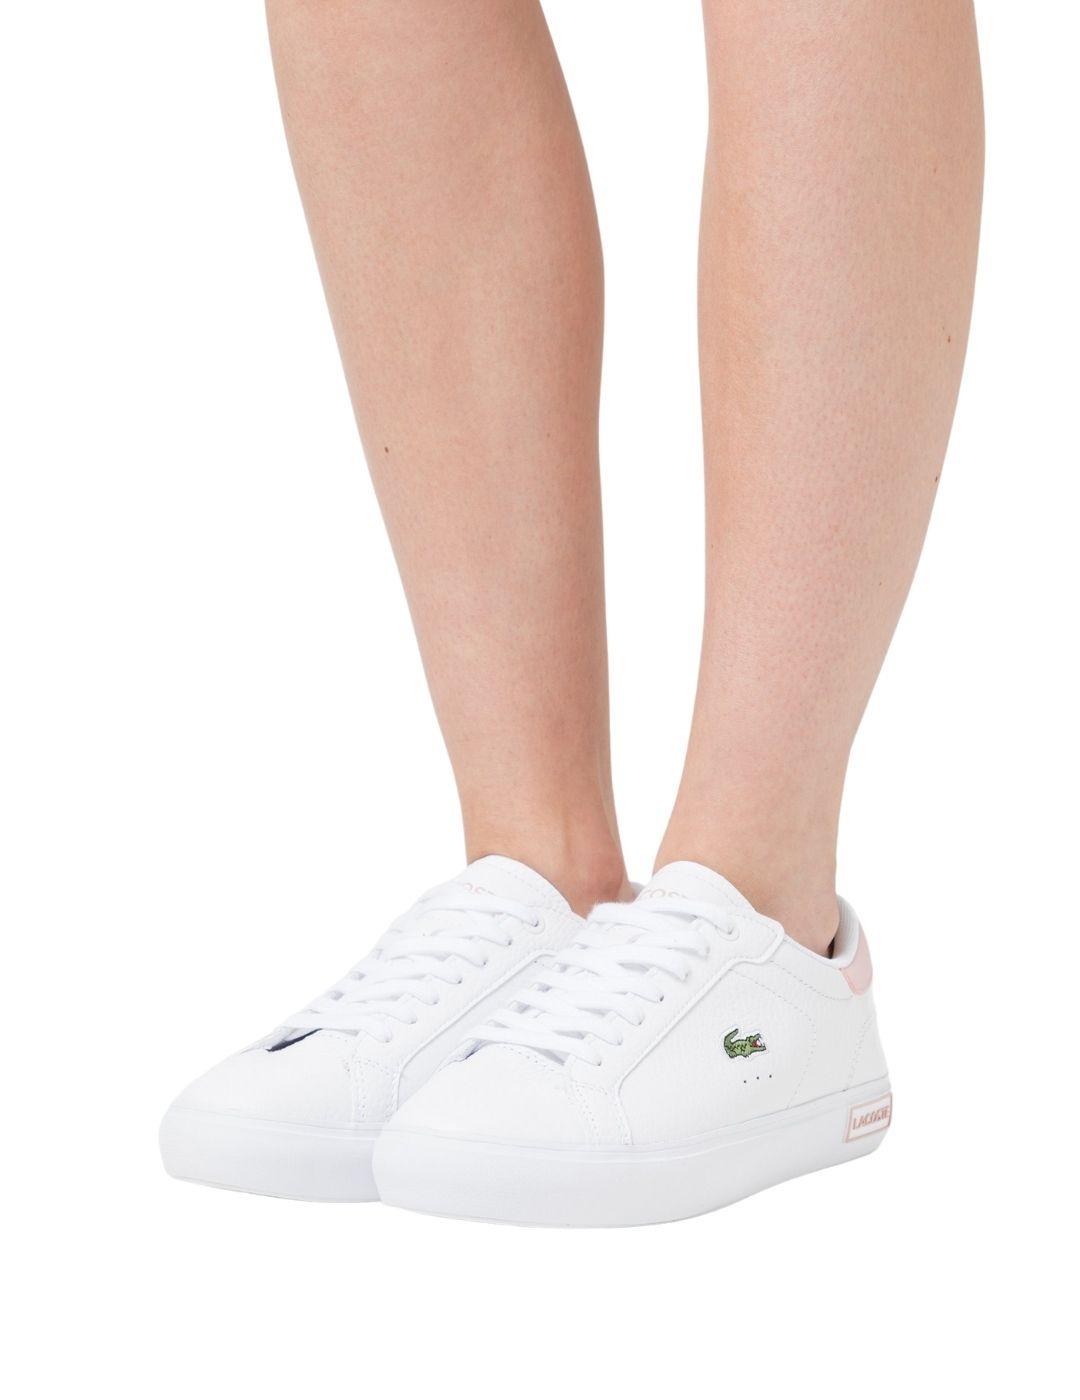 Lacoste Powercourt Blush Leather Sneakers blanco zapatillas mujer